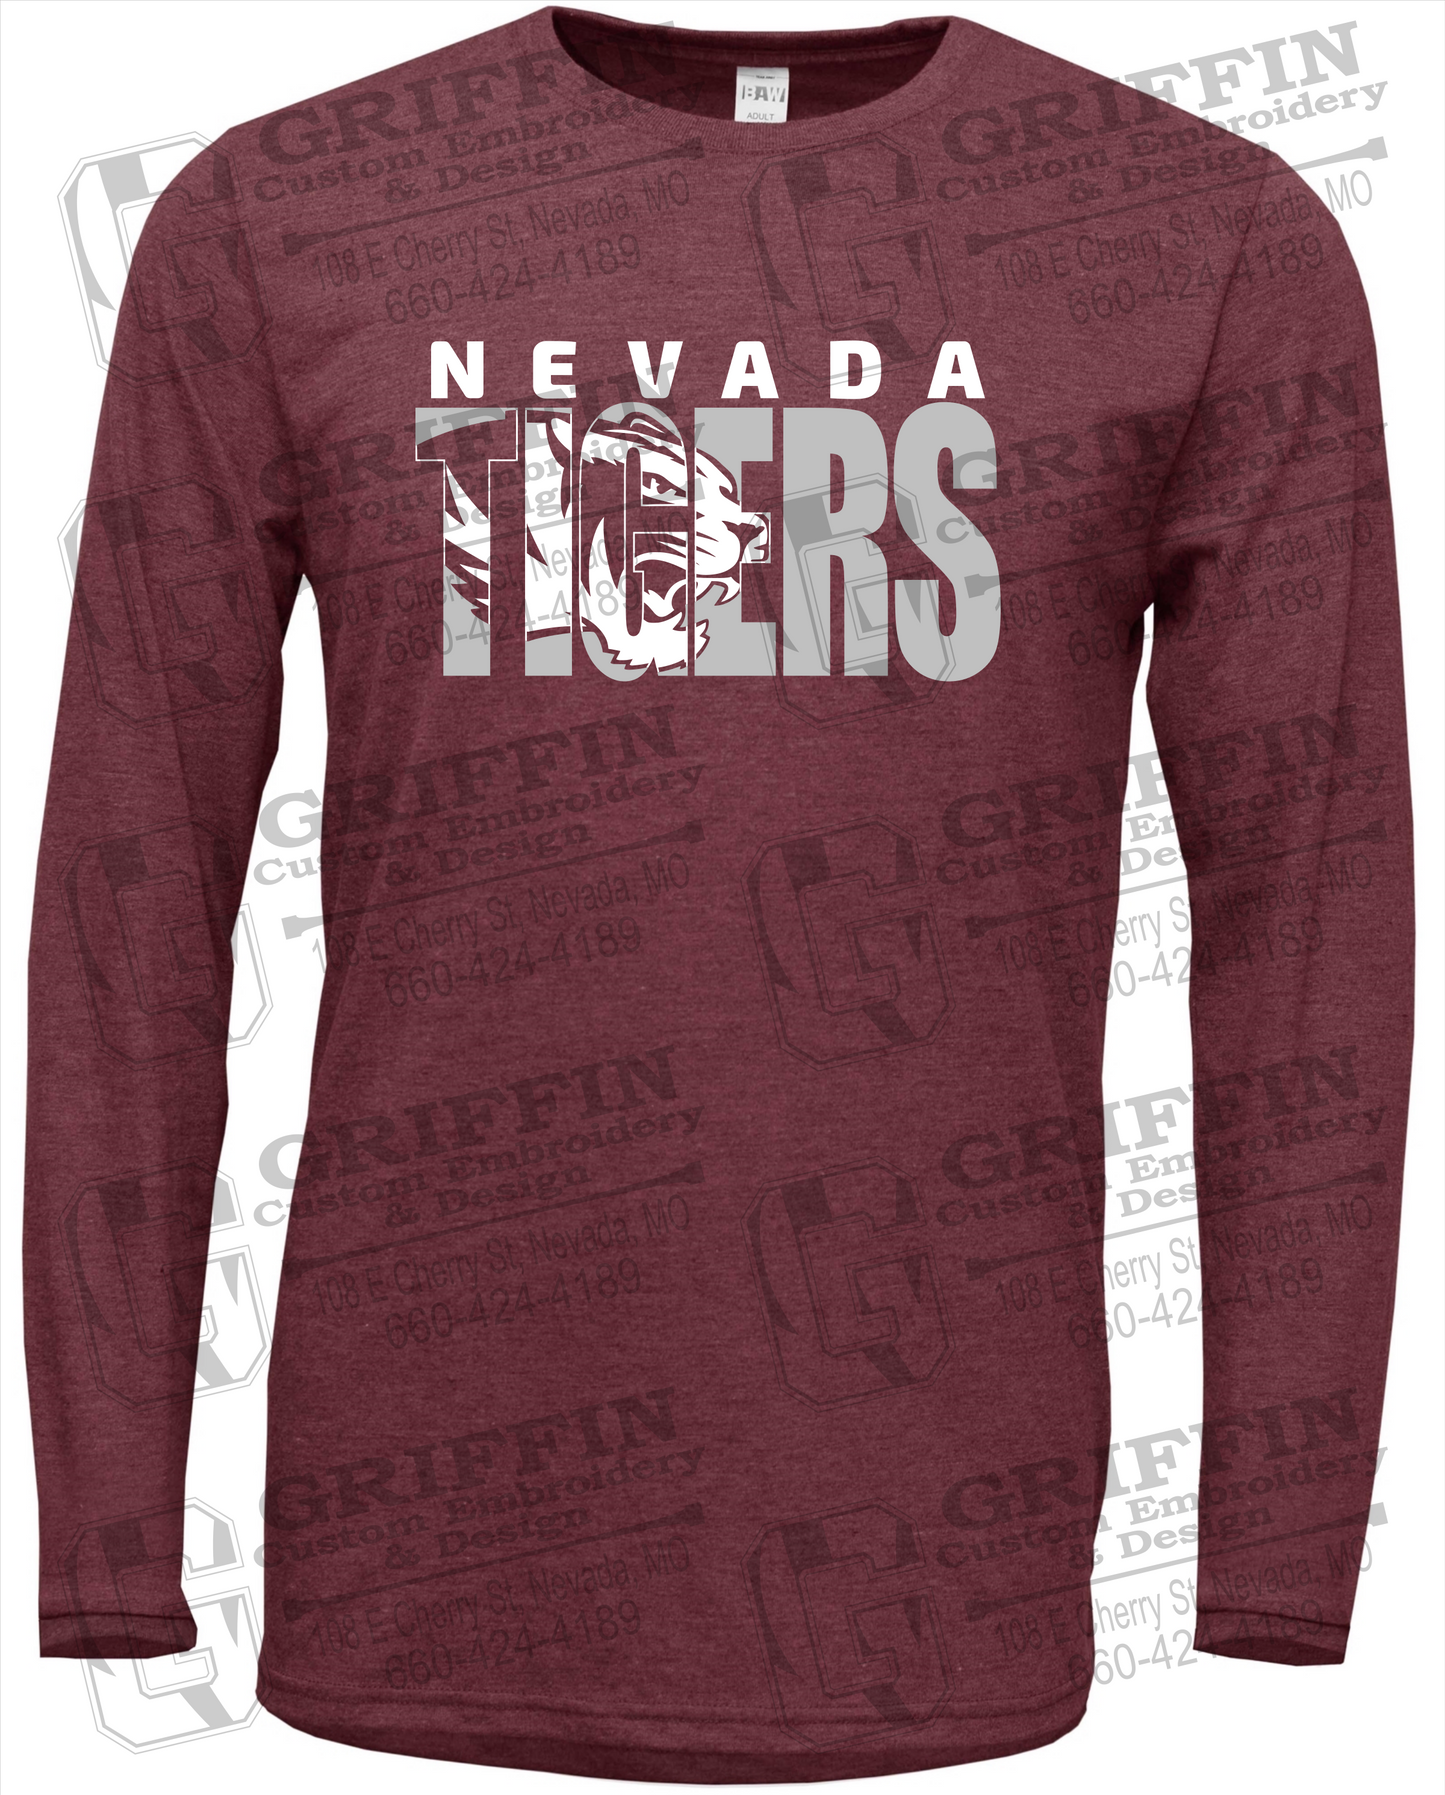 Nevada Tigers 23-F Long Sleeve T-Shirt